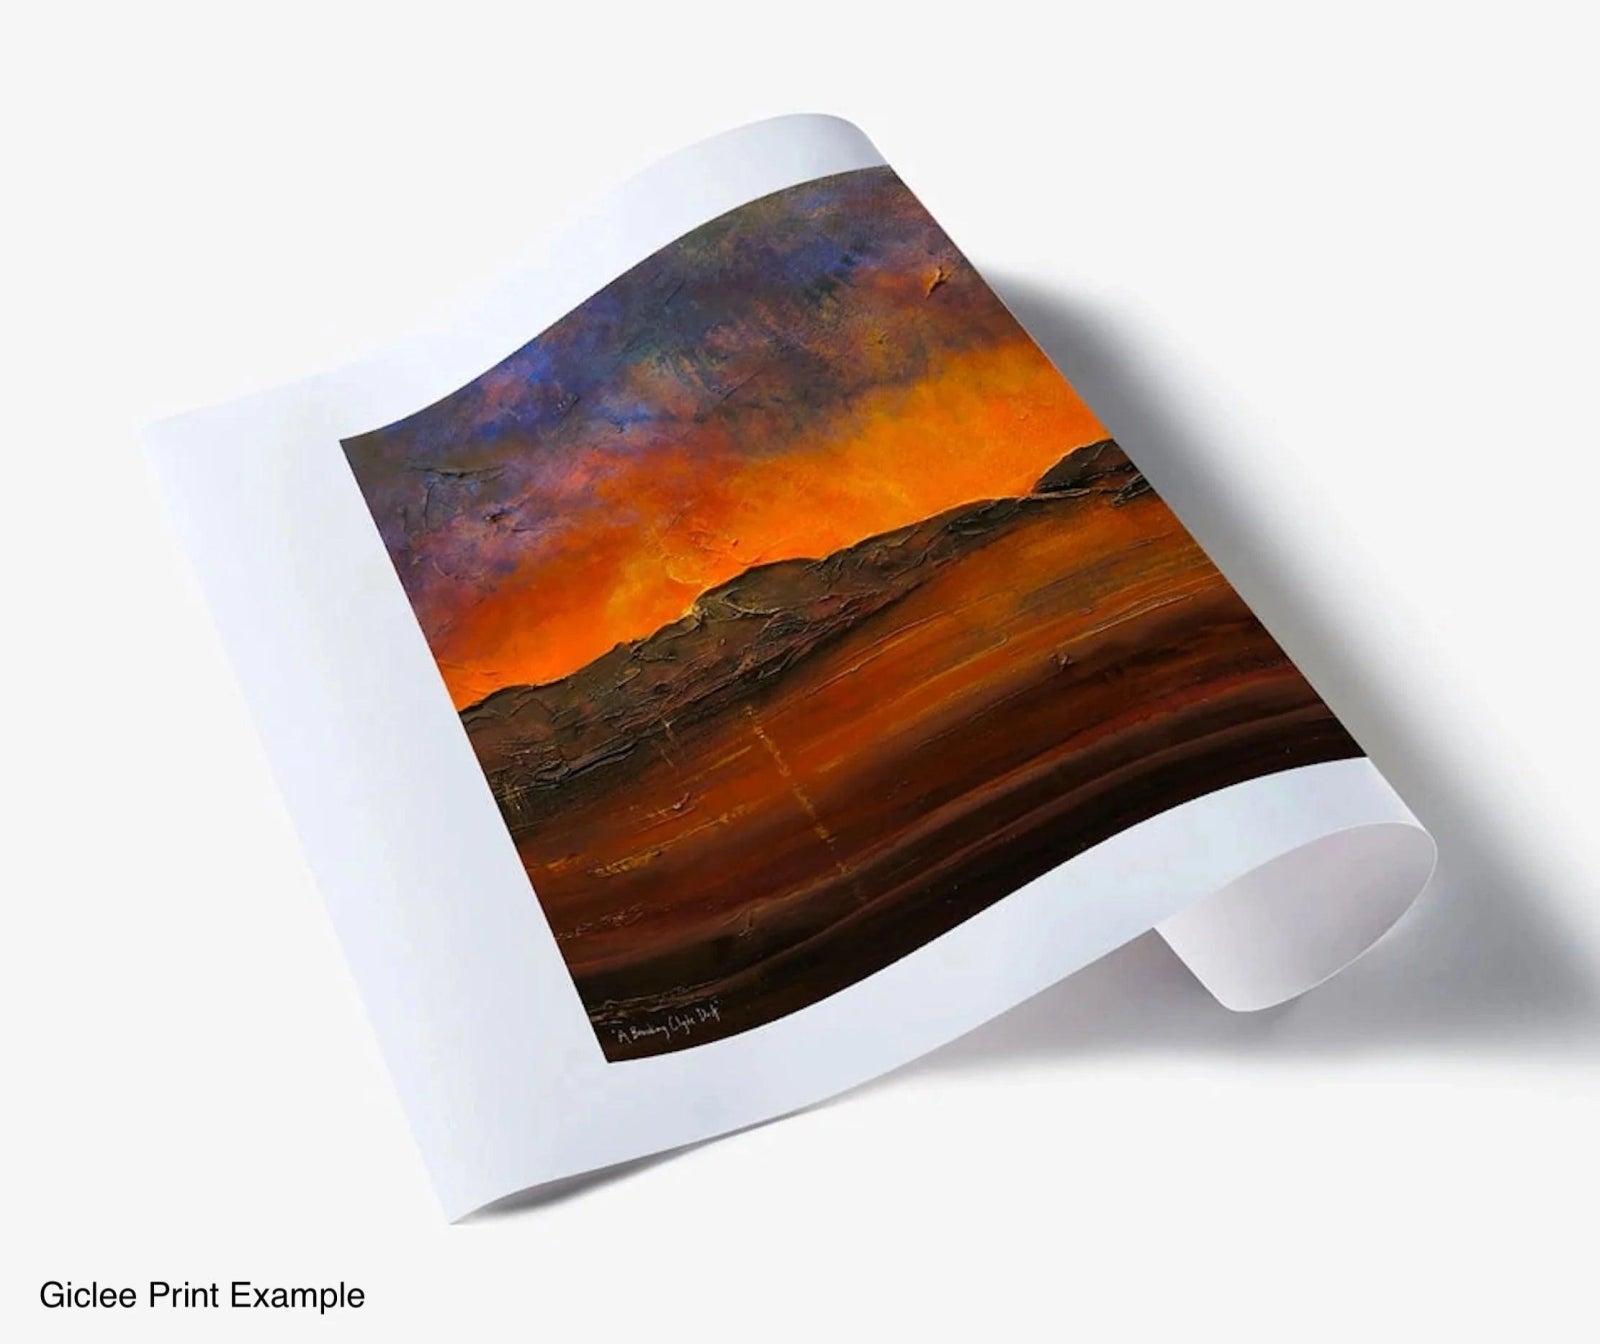 Glencoe Moonlit Snow-Panoramic Prints-Glencoe Art Gallery-Paintings, Prints, Homeware, Art Gifts From Scotland By Scottish Artist Kevin Hunter